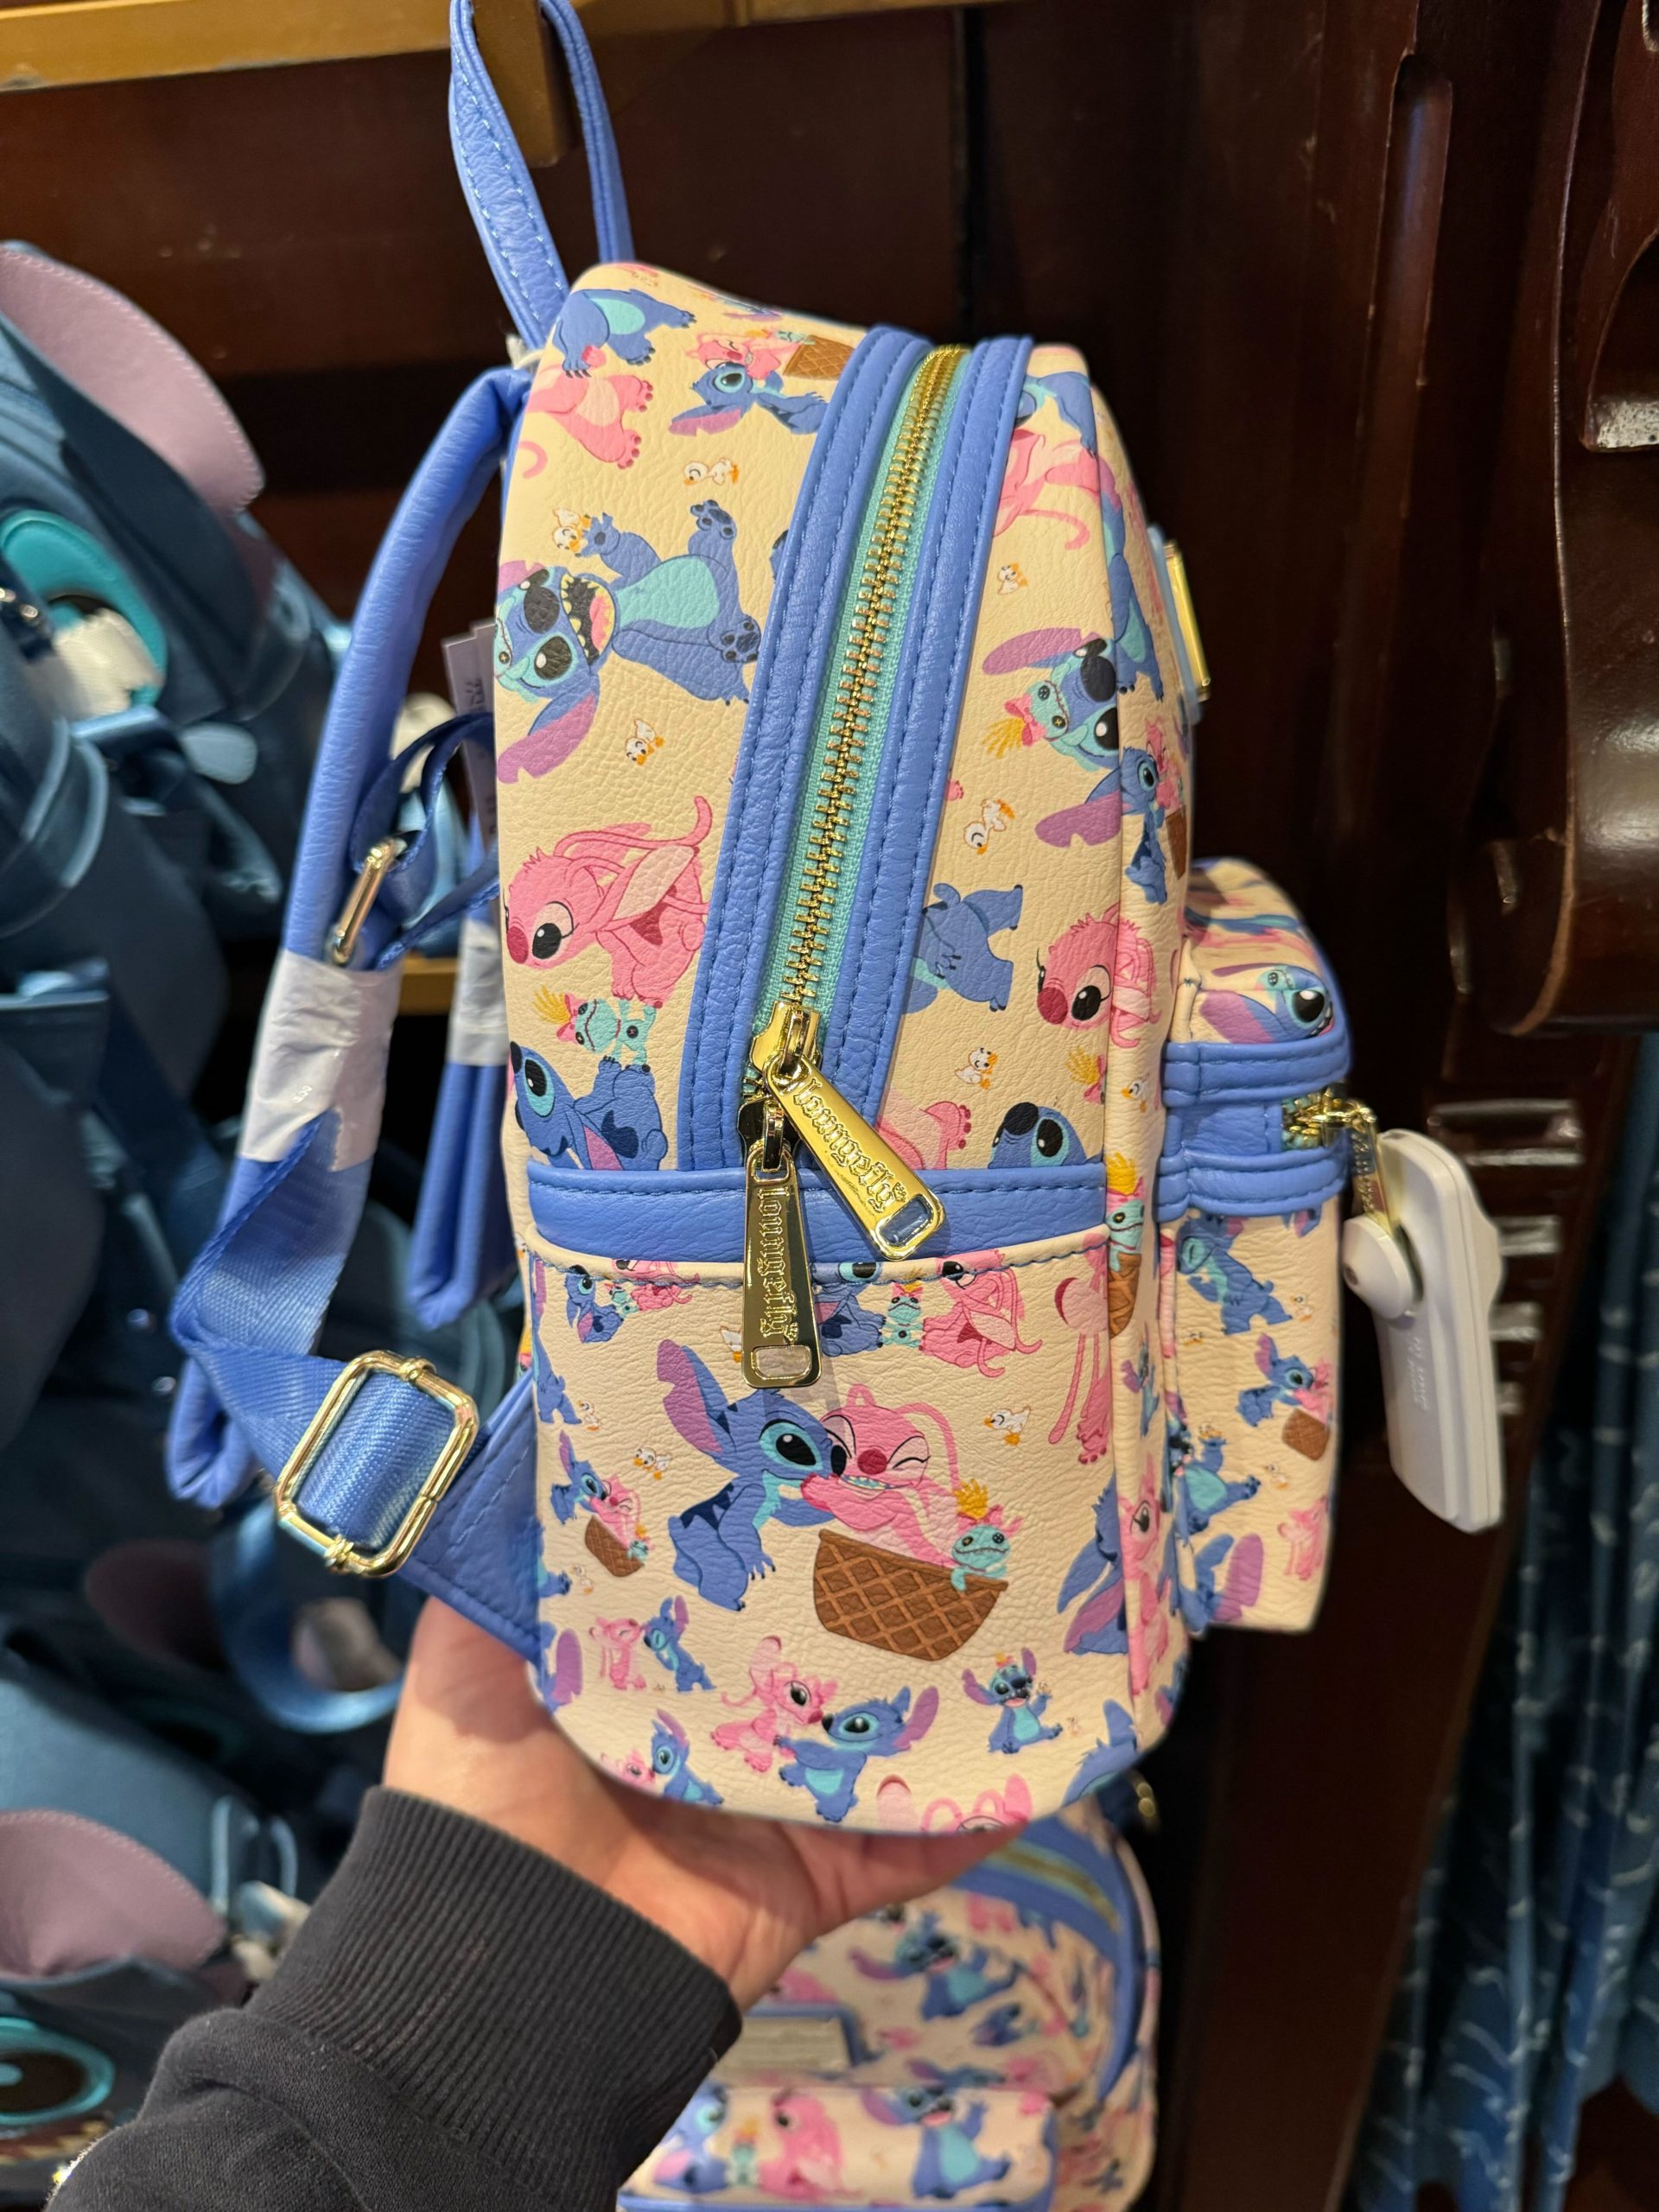 Disneyland Drops the Cutest New Stitch Merchandise! - MickeyBlog.com